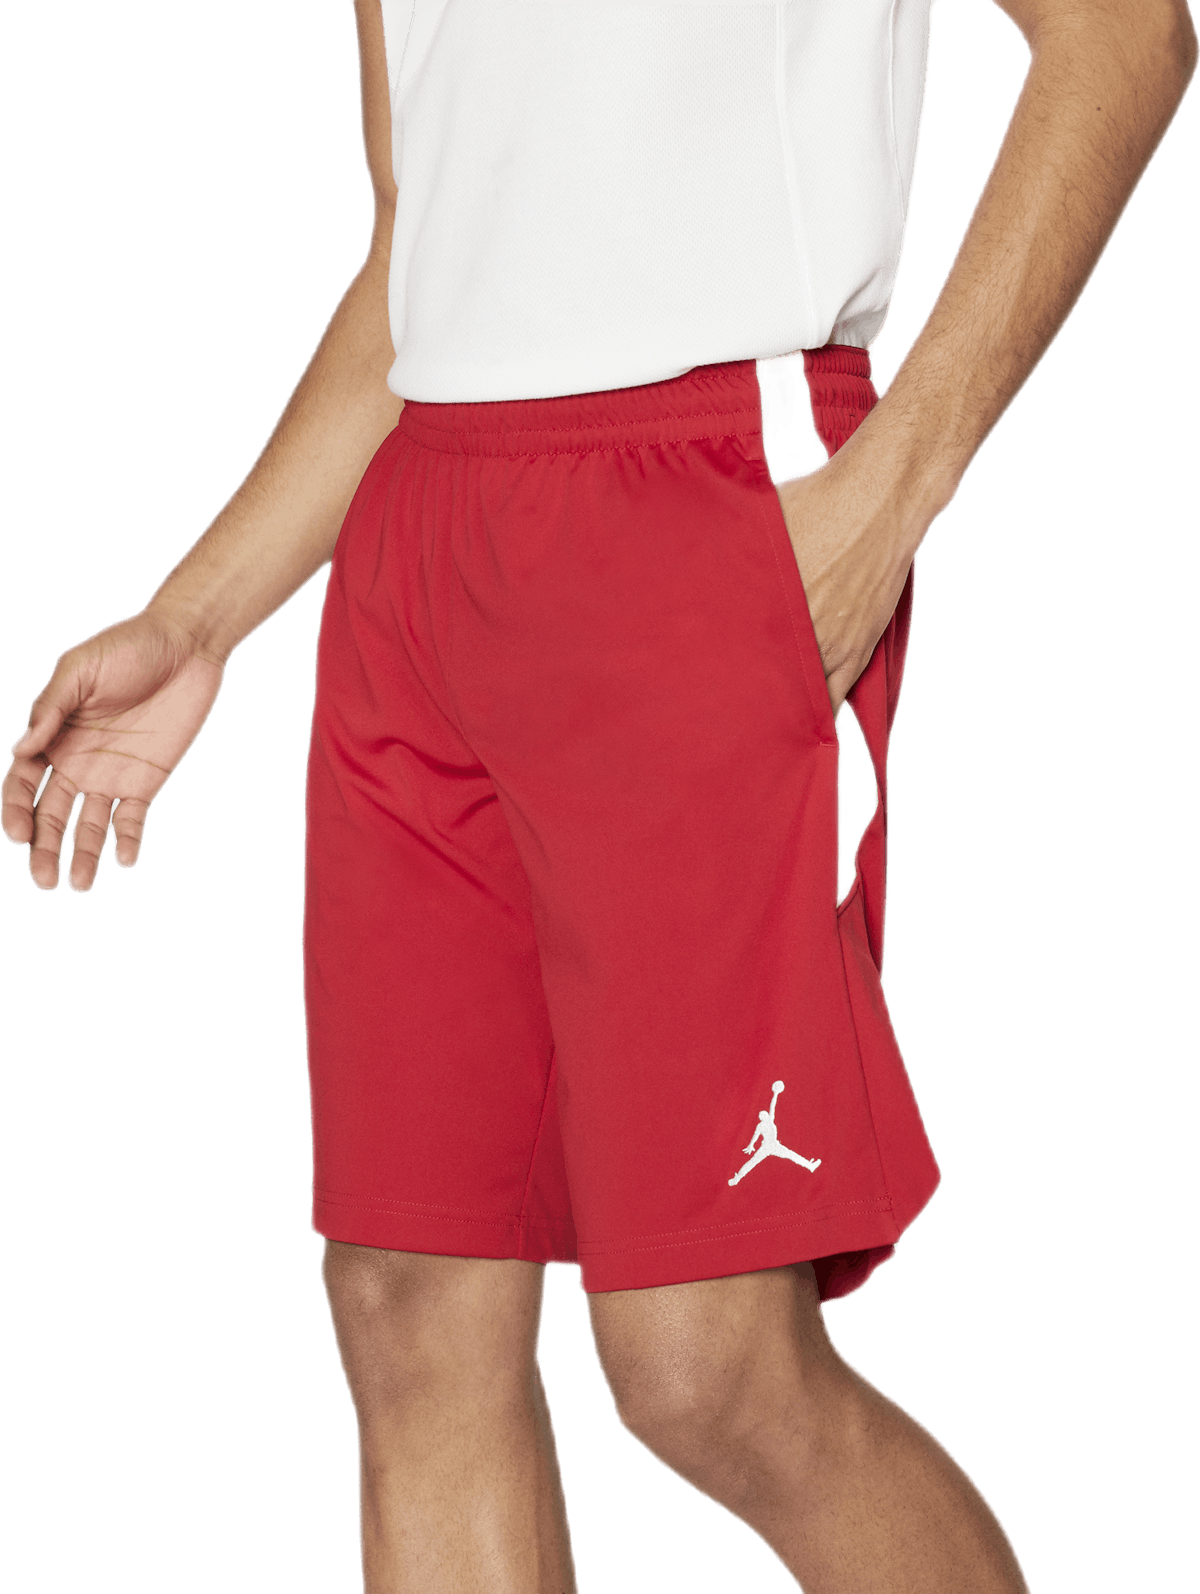 Dry Knit Short Gym Red/White/White